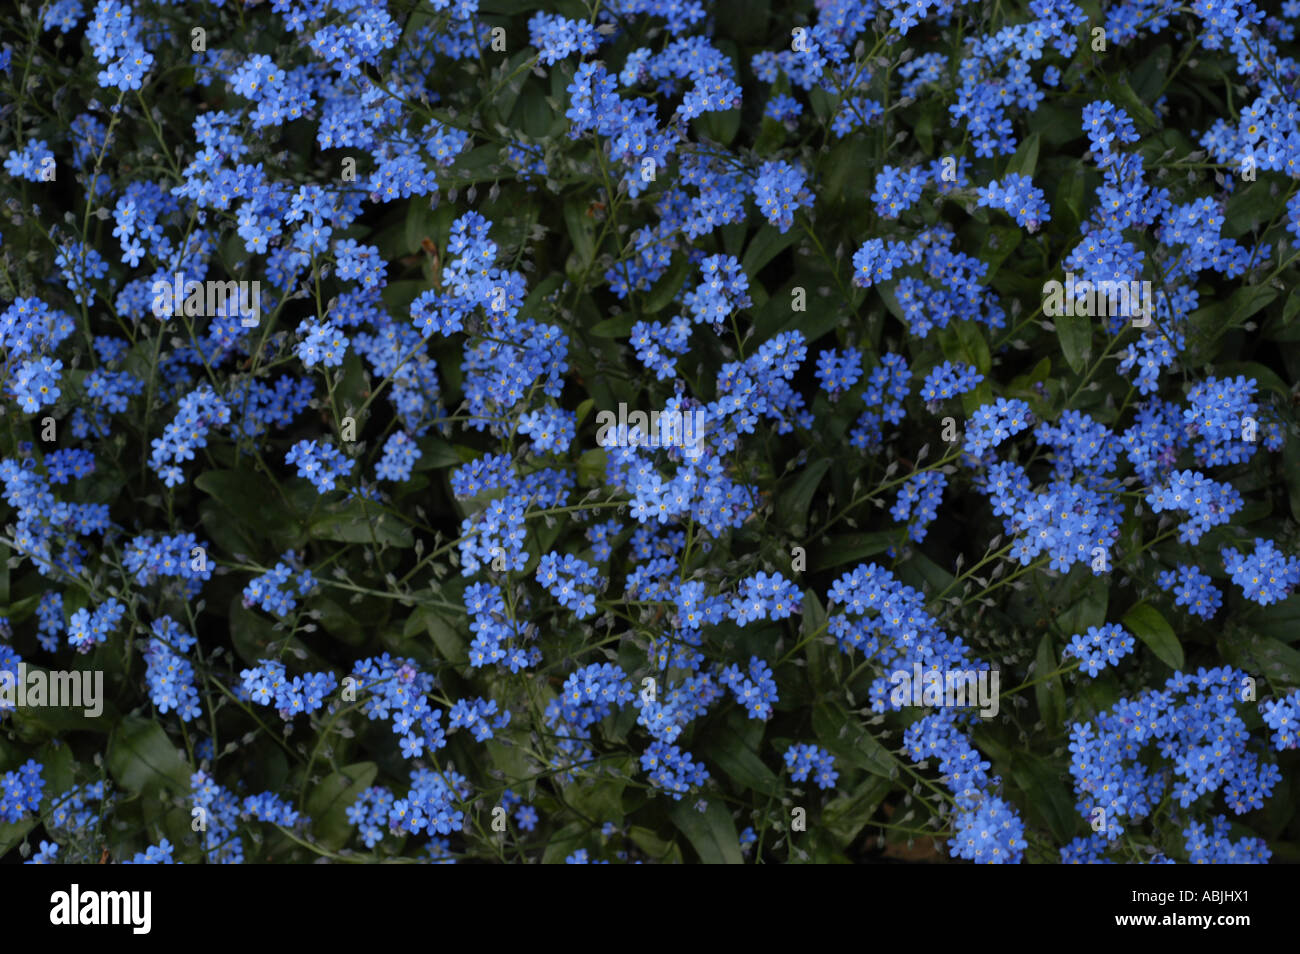 Blue flowers of field forget me not plant Boraginaceae Myosotis arvensis Stock Photo